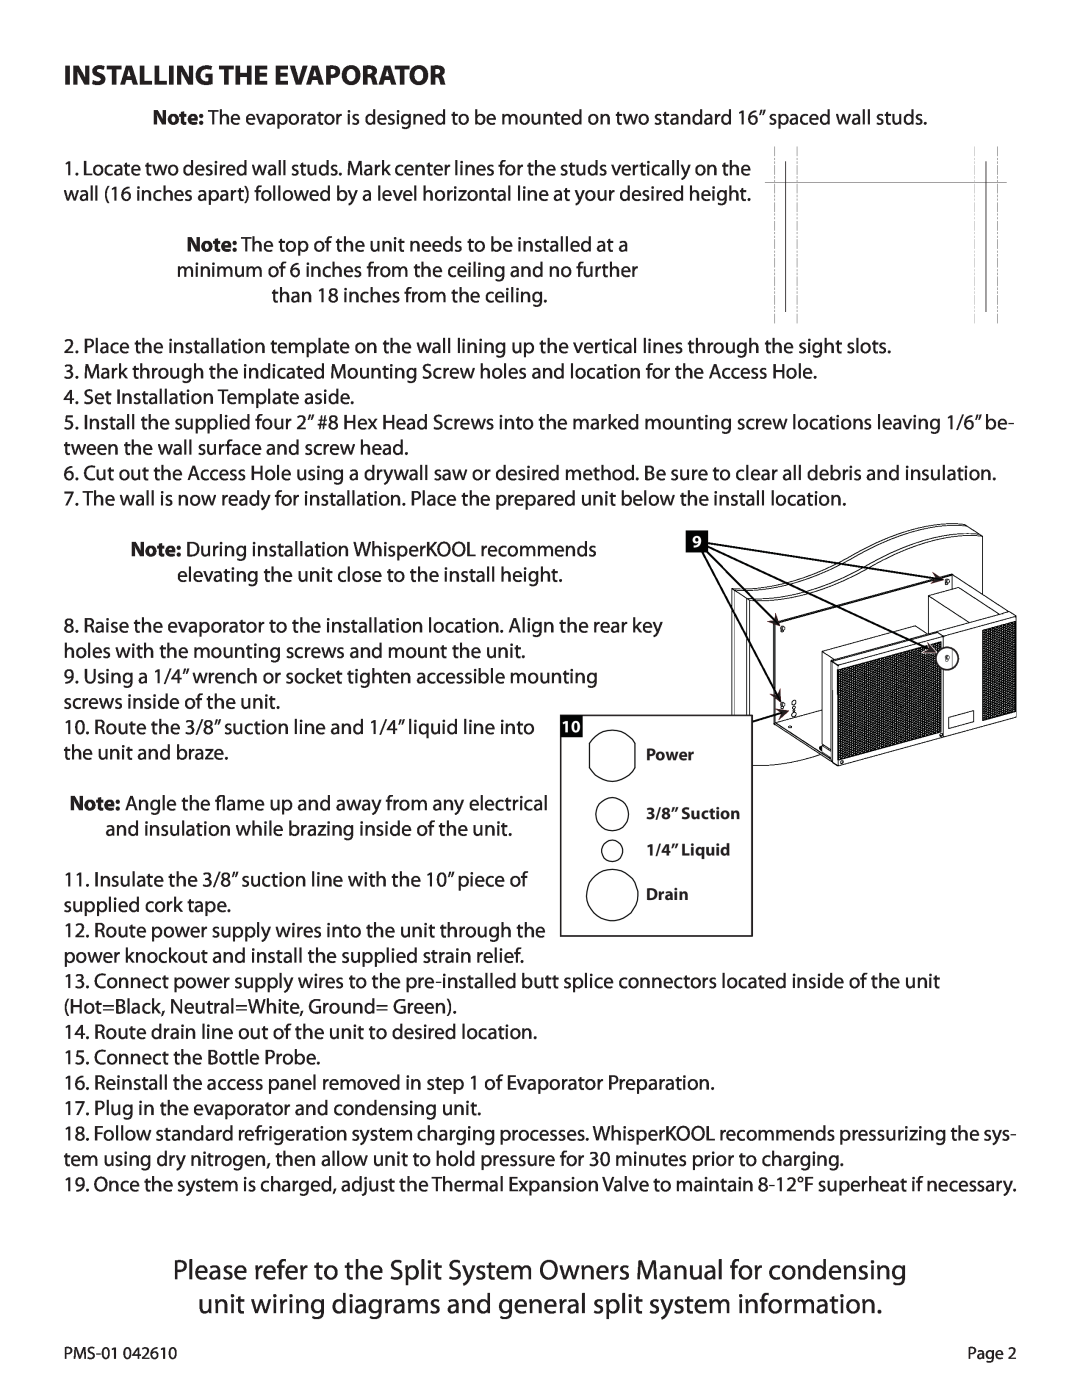 WhisperKool 042610, 2PMS-01 owner manual Installing The Evaporator 